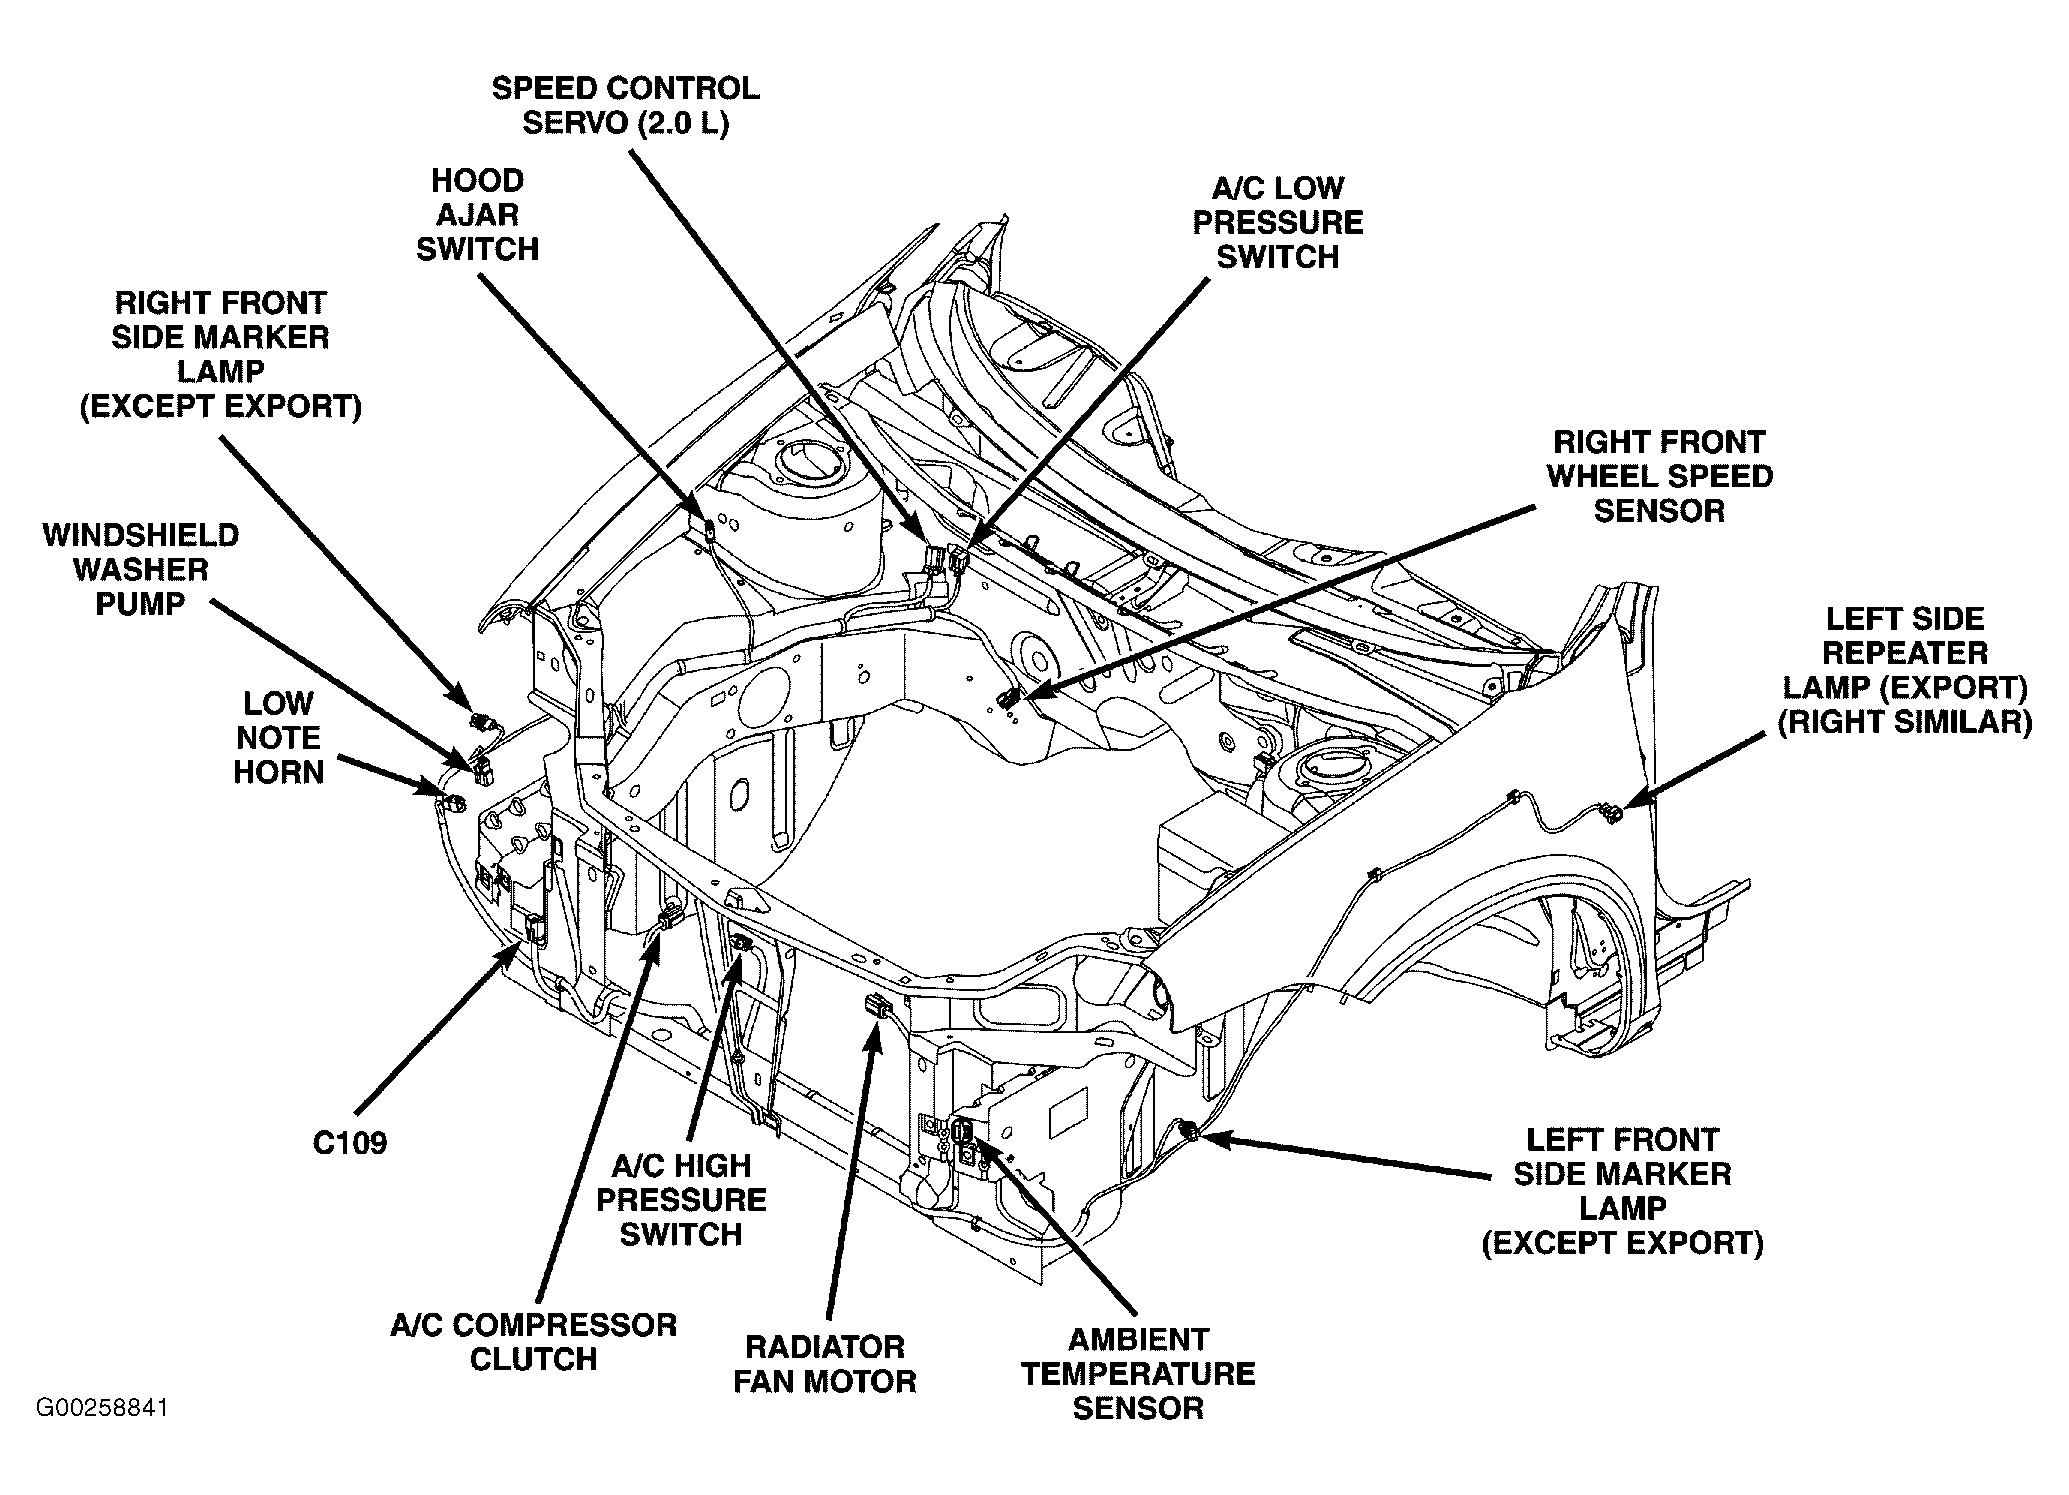 Dodge SX R/T 2005 - Component Locations -  Engine Compartment